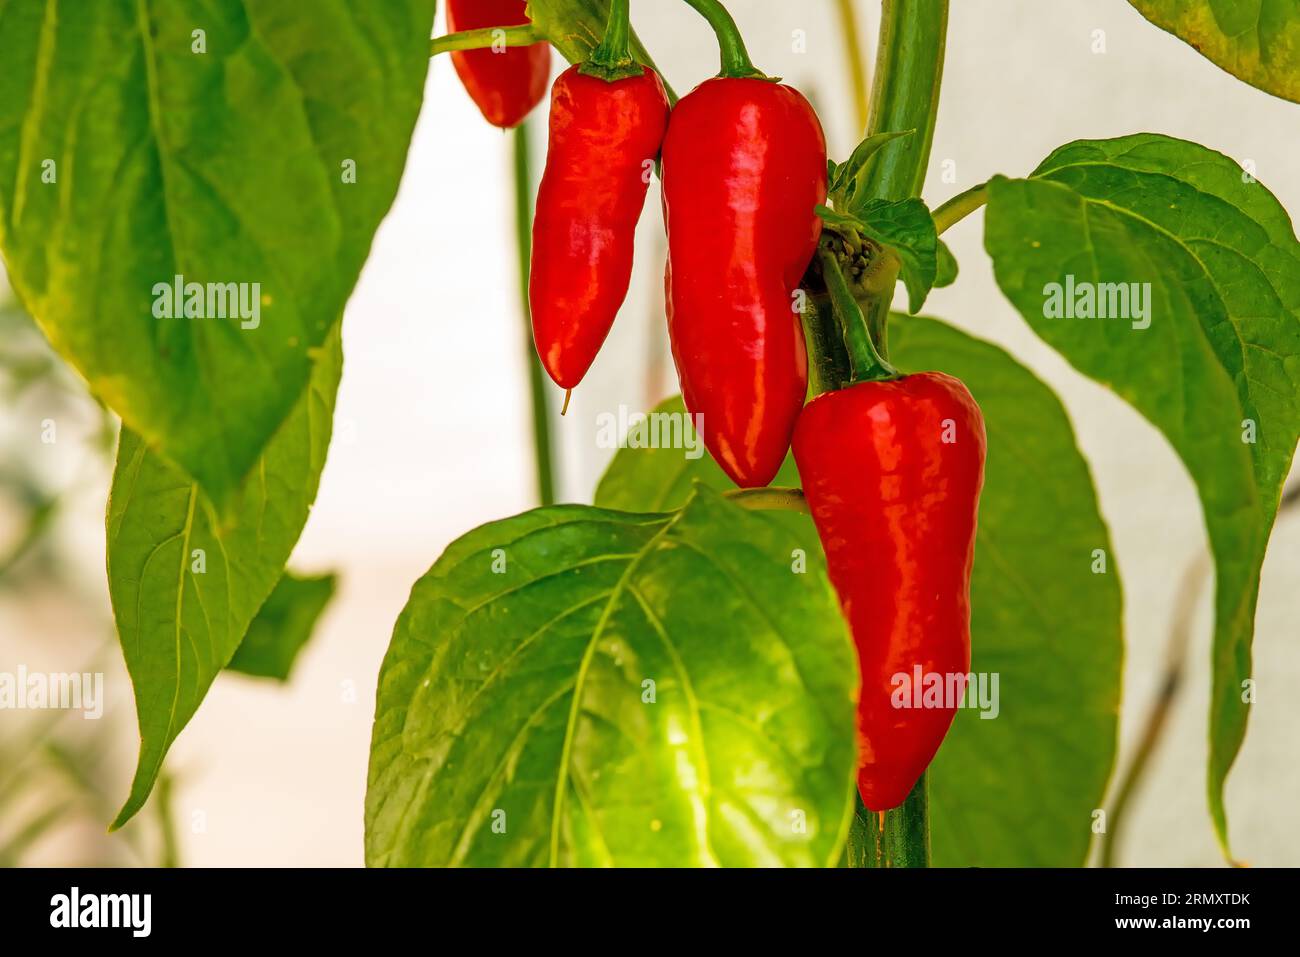 The ghost pepper Bhut Jolokoa with ripe fruits Stock Photo